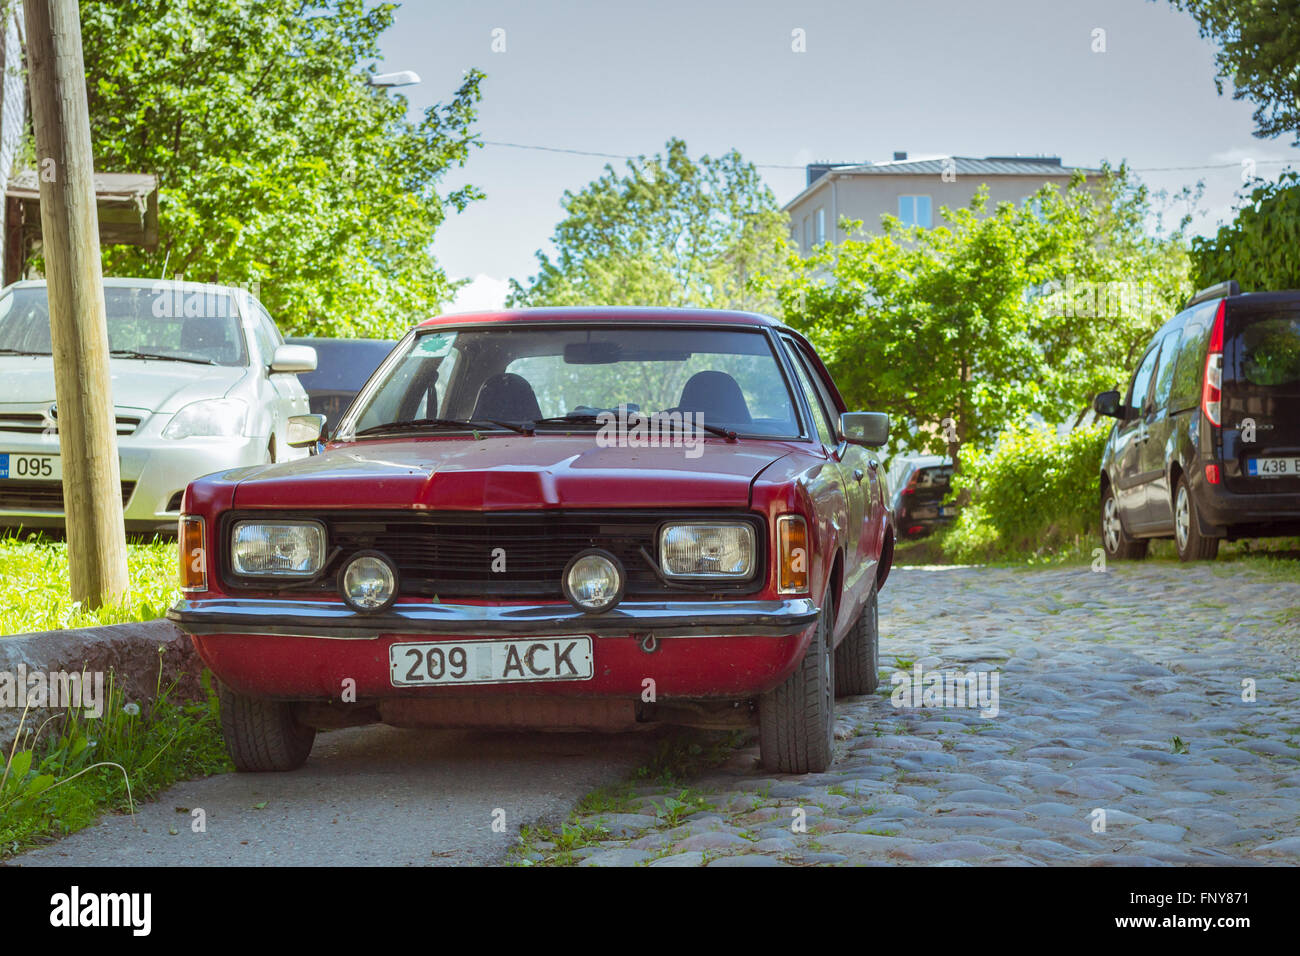 Tallinn, Estonia - Yuni 12, 2015: Red old car Ford Taunus parked on pavement in a deserted street. Sunny summer day. Tallinn Stock Photo